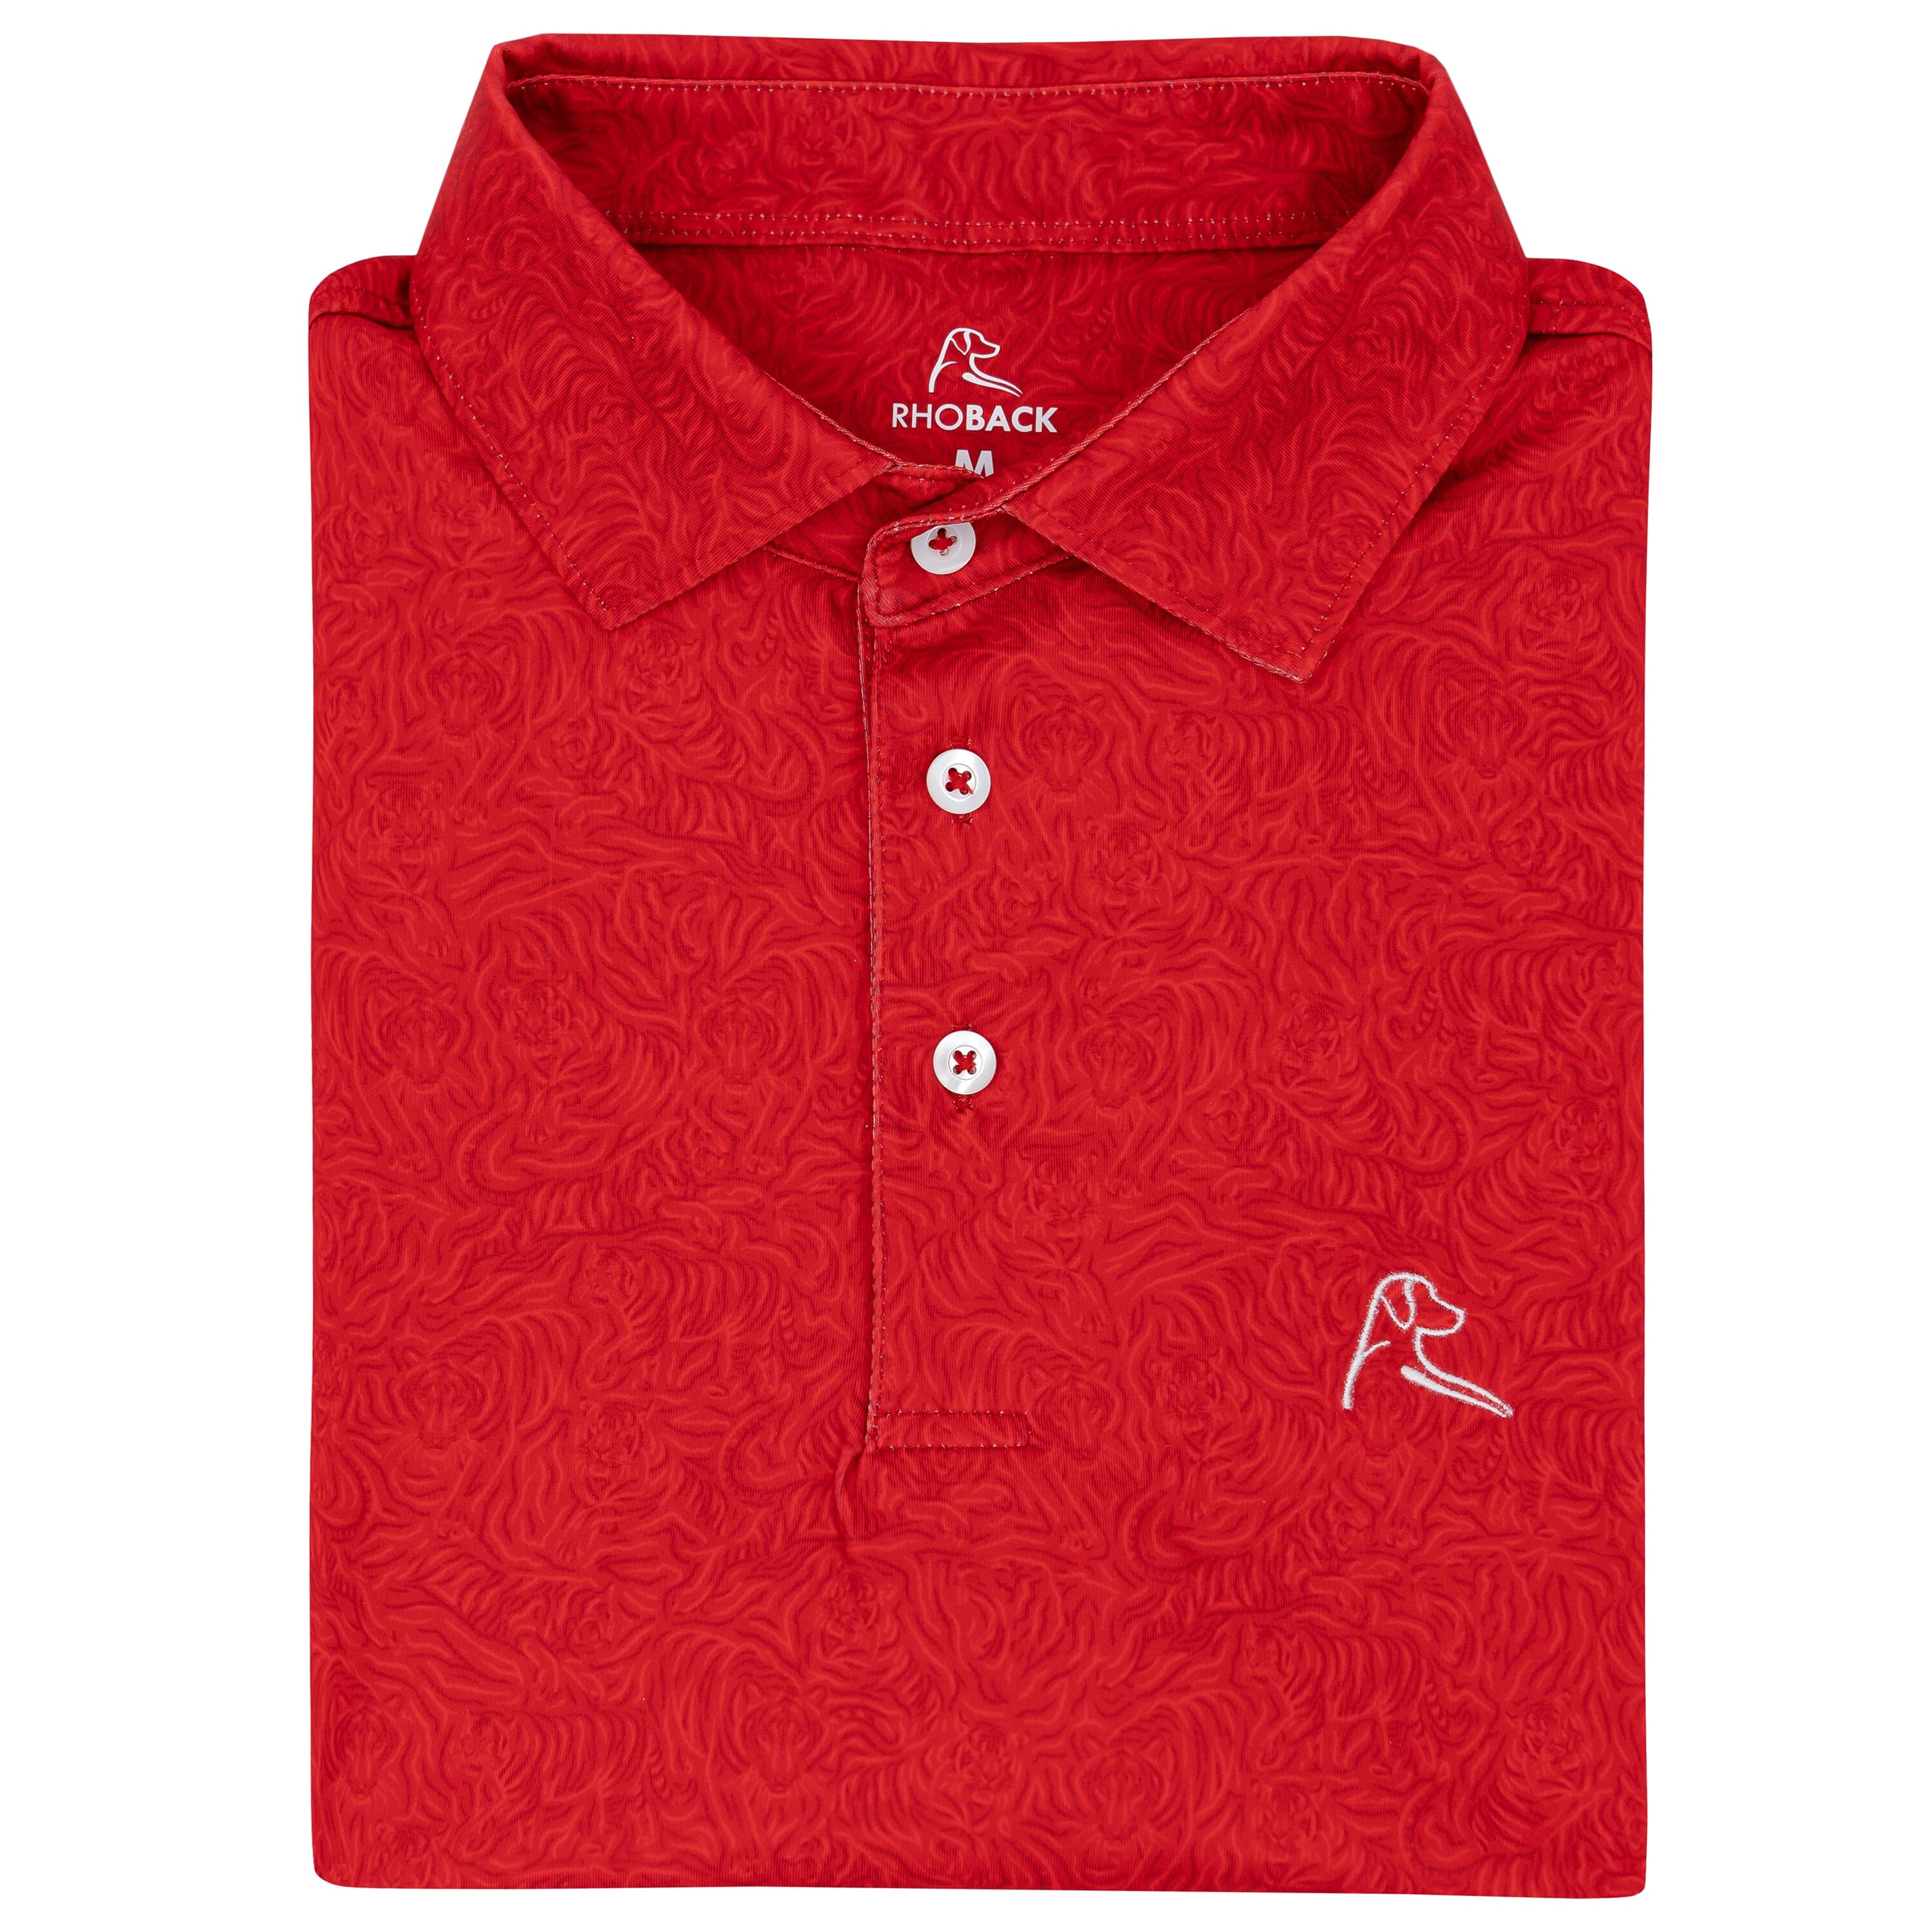 St. Louis Cardinals Mens Polo, Cardinals Polos, Golf Shirts